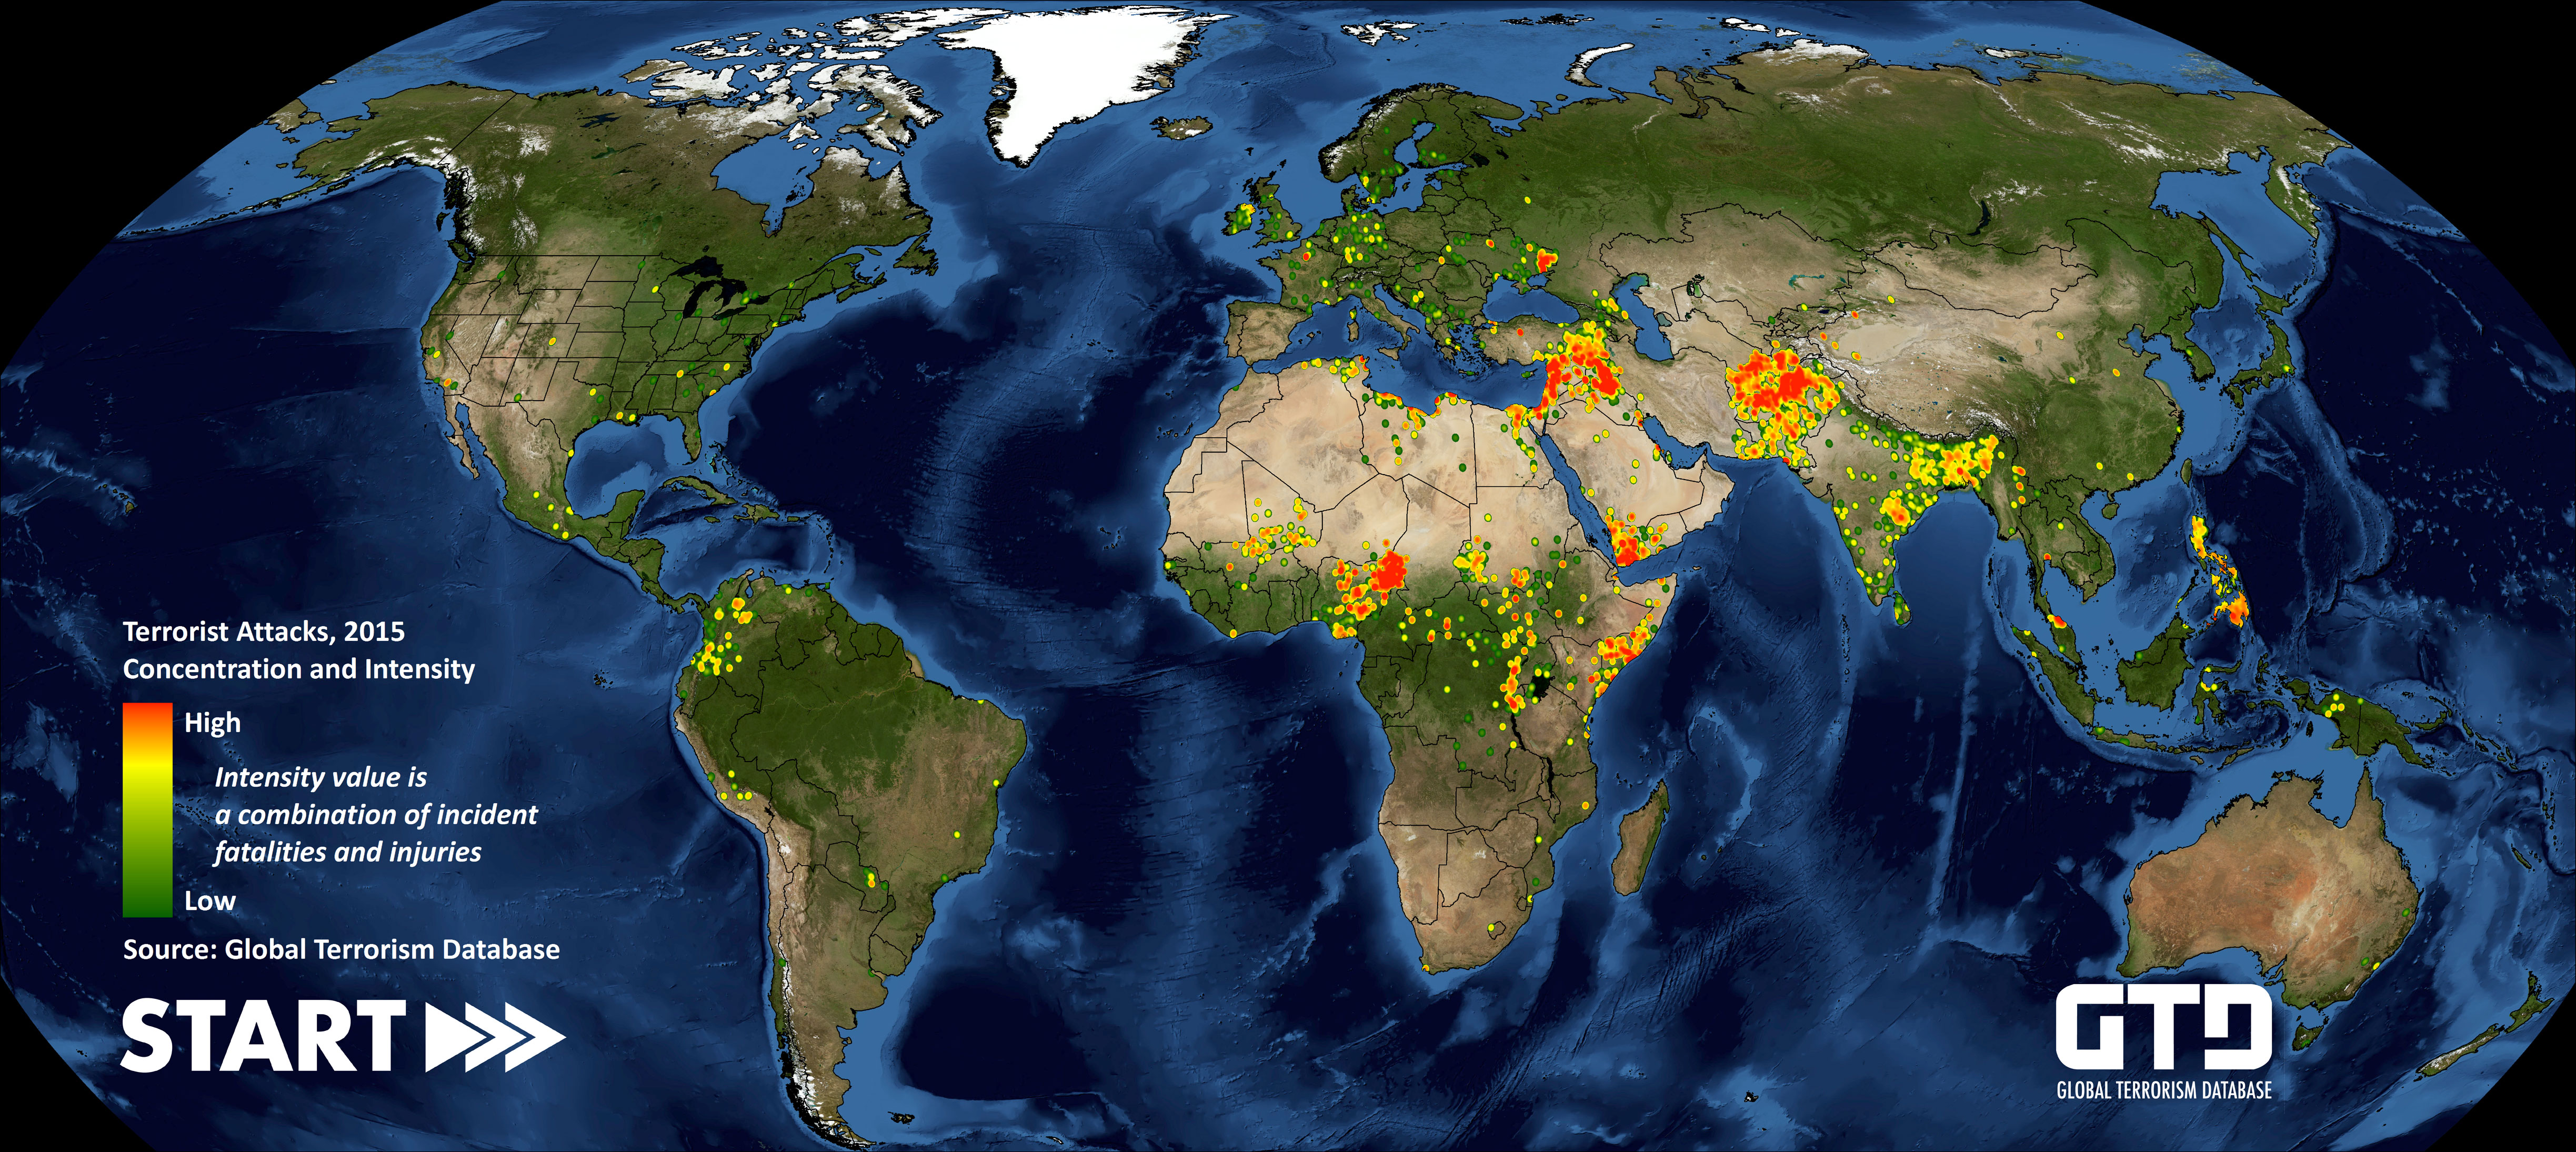 START_GlobalTerrorismDatabase_2015TerroristAttacksConcentrationIntensityMap.jpg